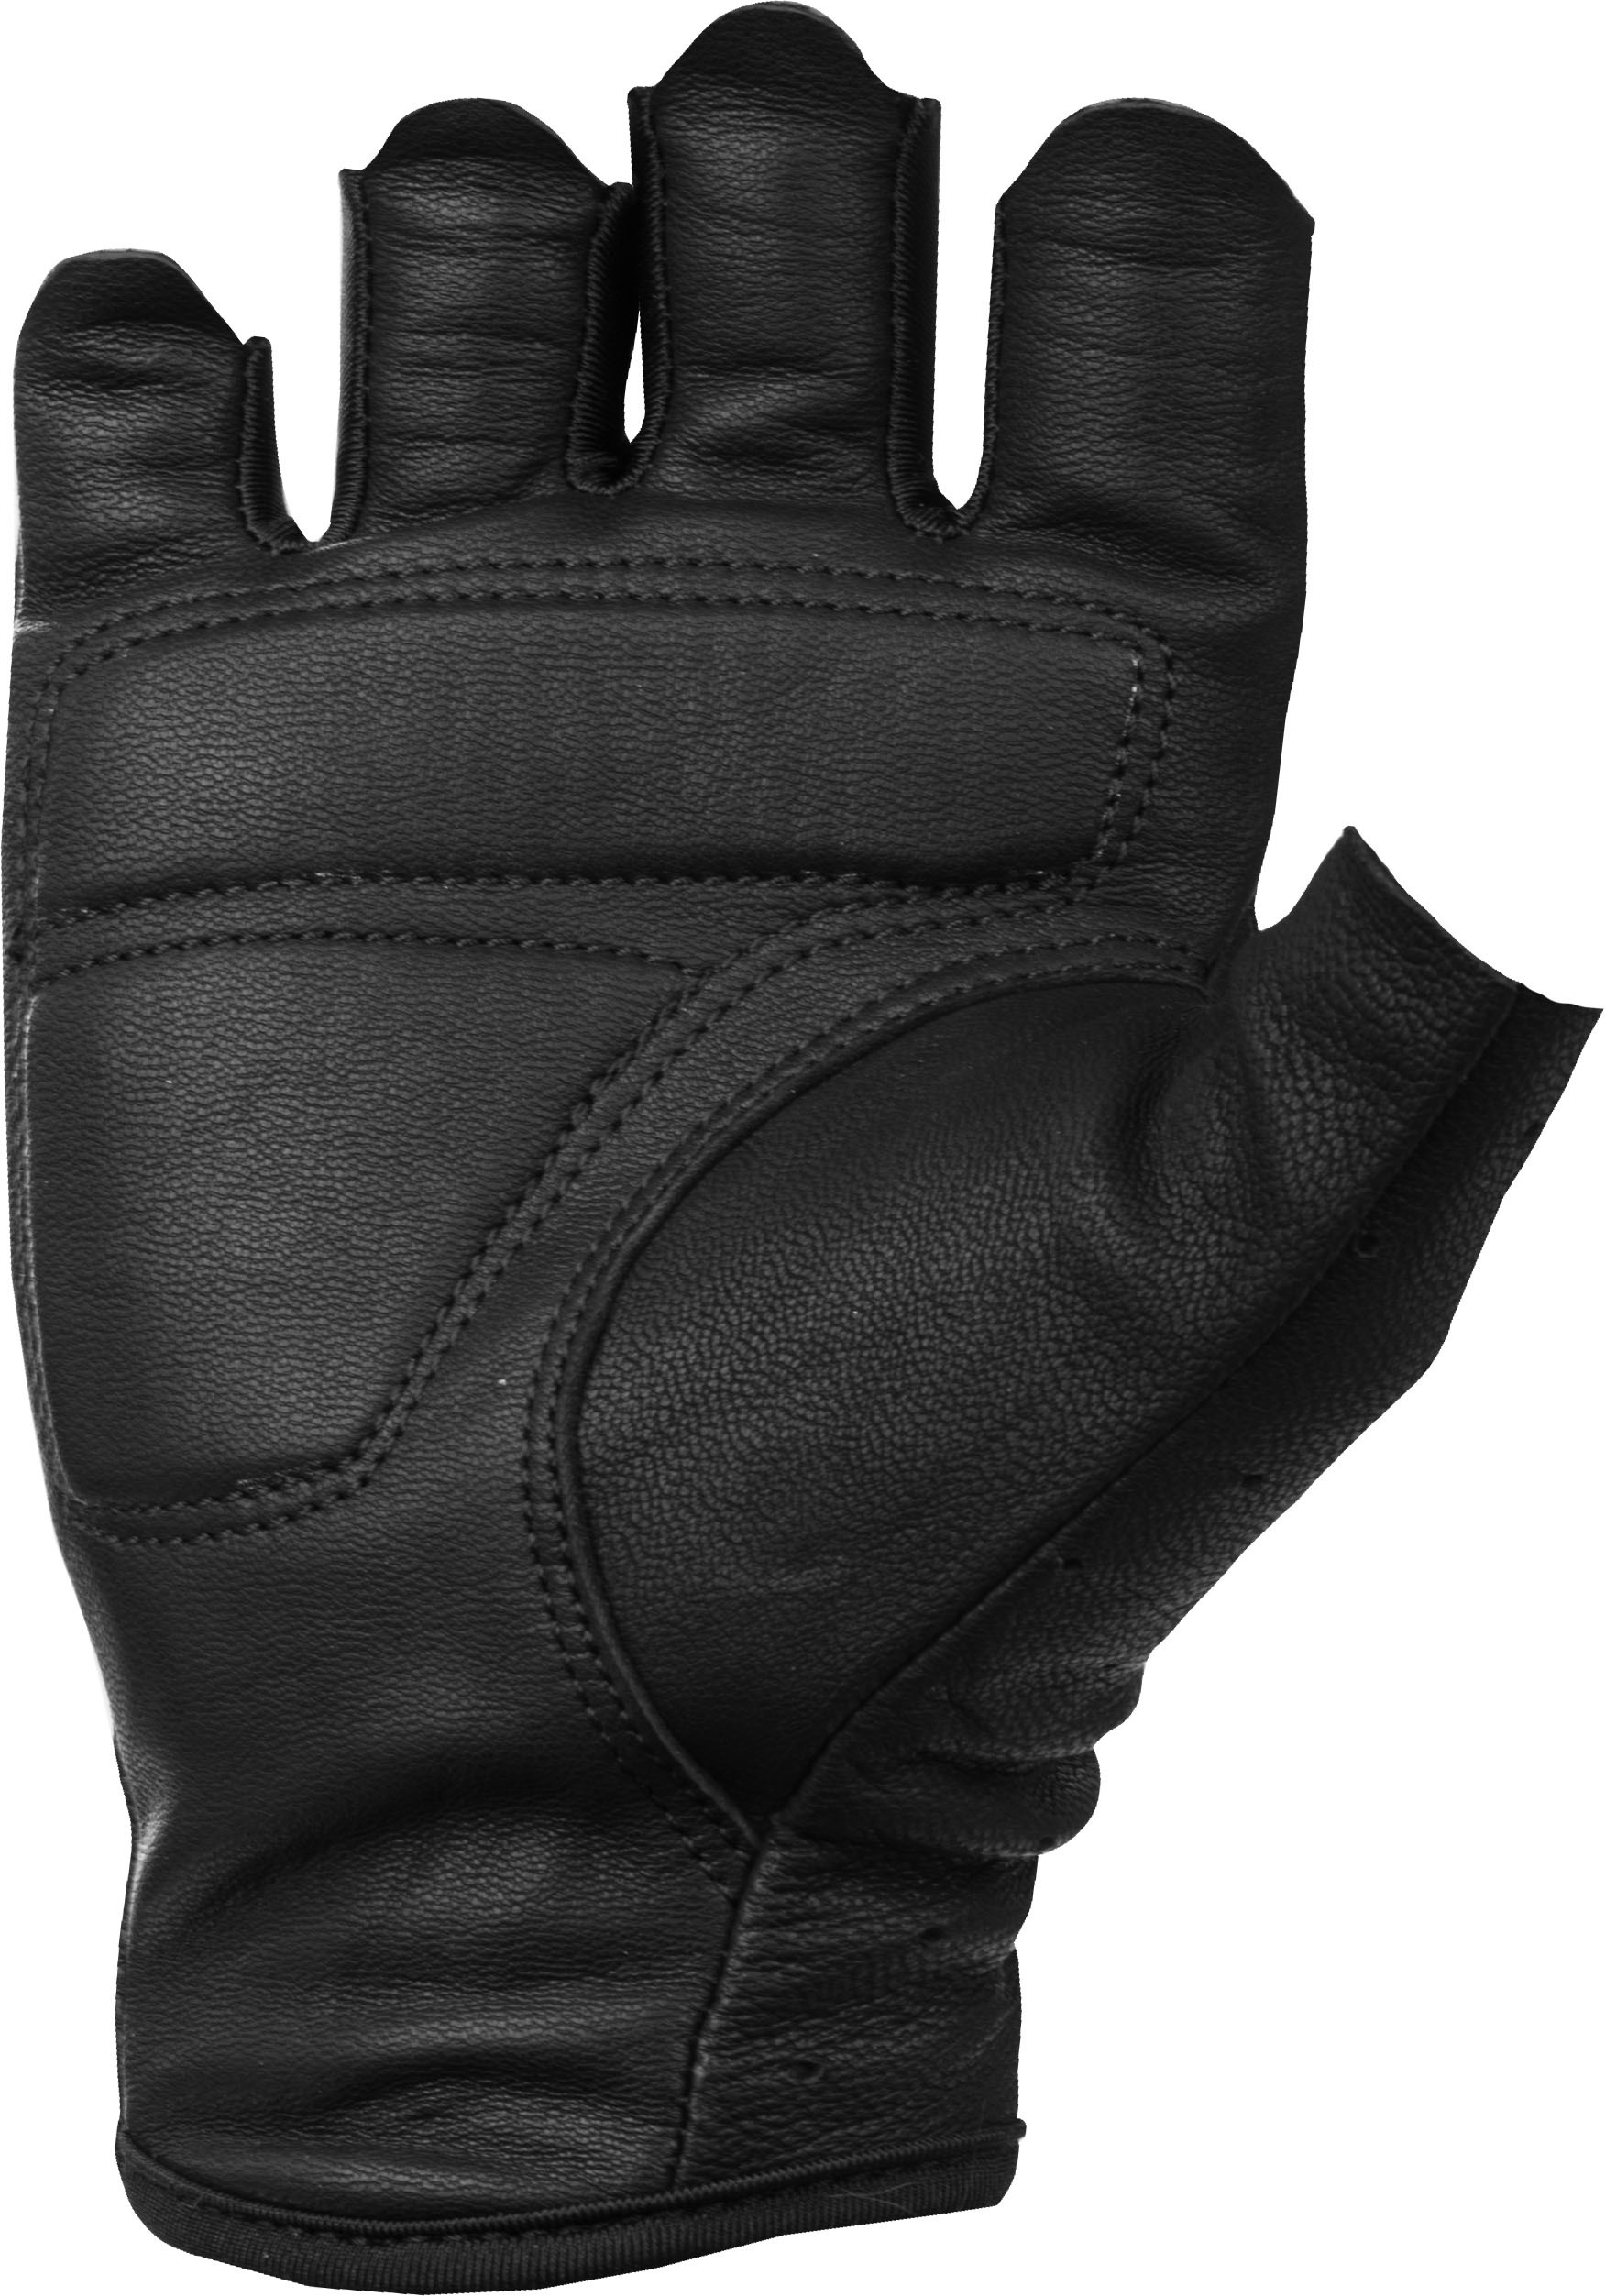 Women's Ranger Riding Gloves Black 2X-Large - Click Image to Close